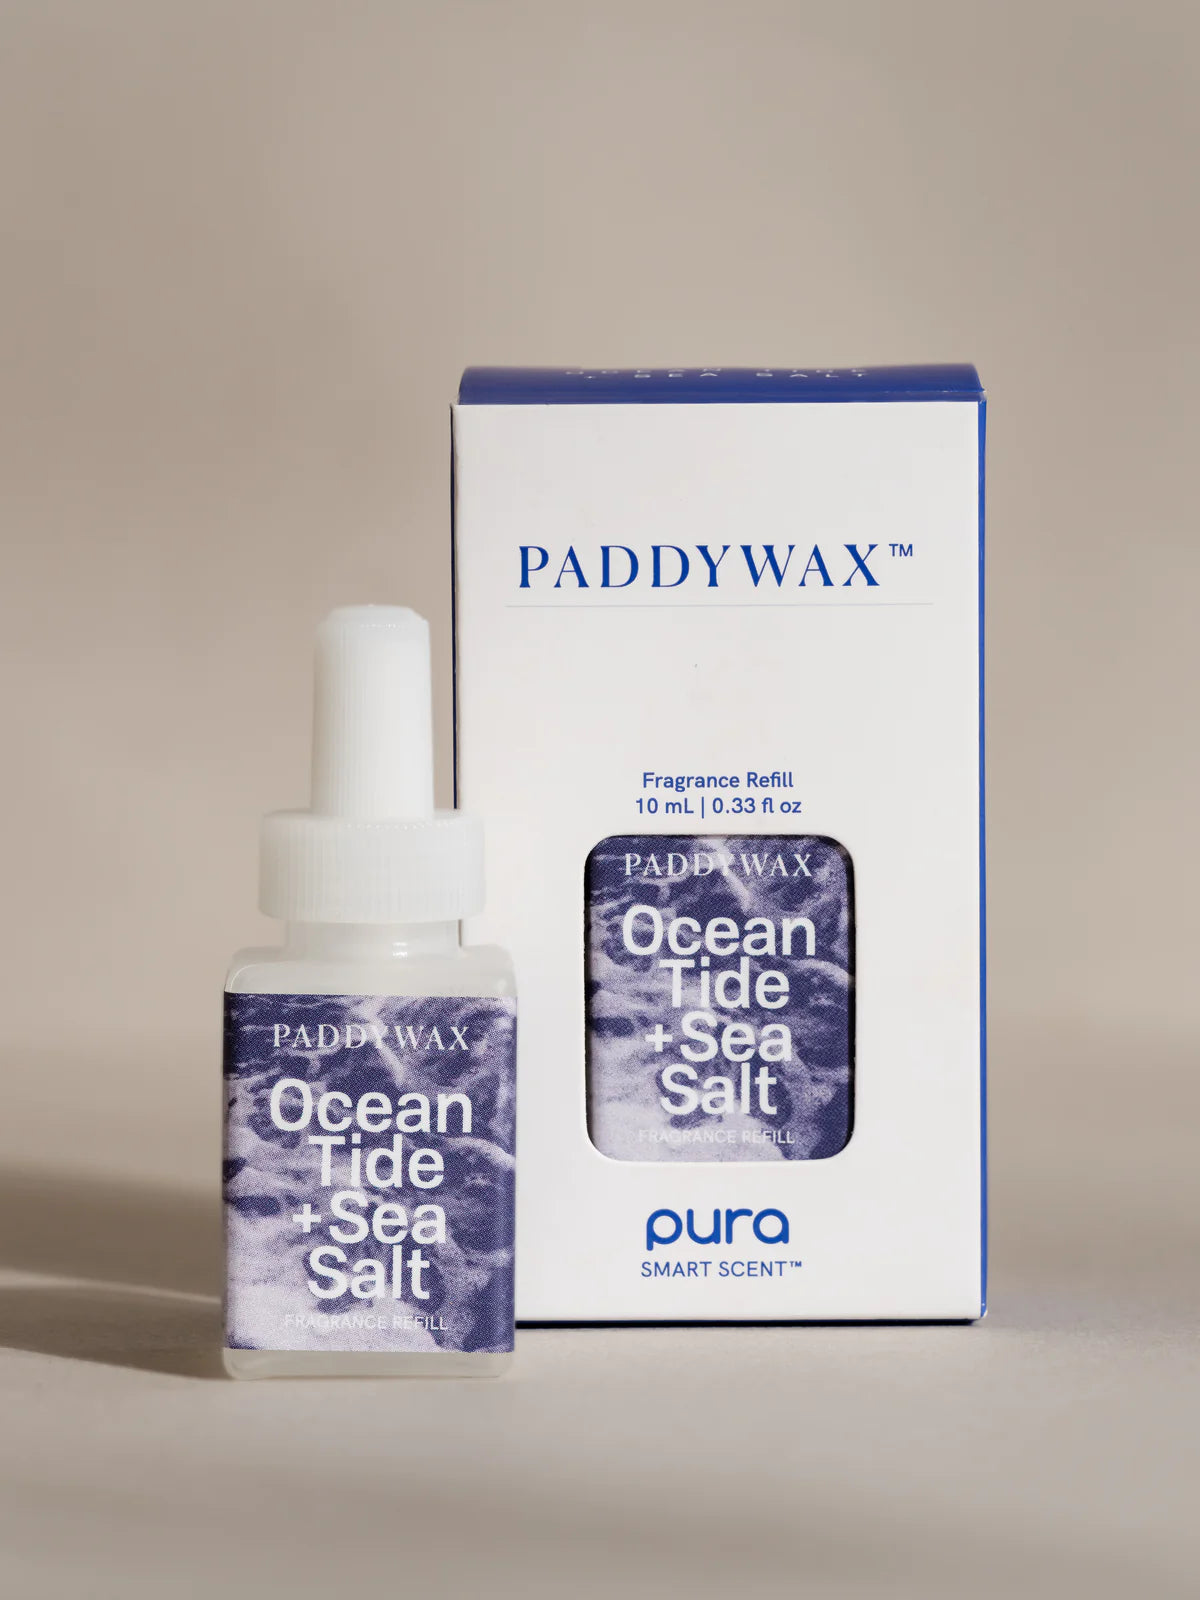 Ocean Tide + Sea Salt Pura Fragrance Refill